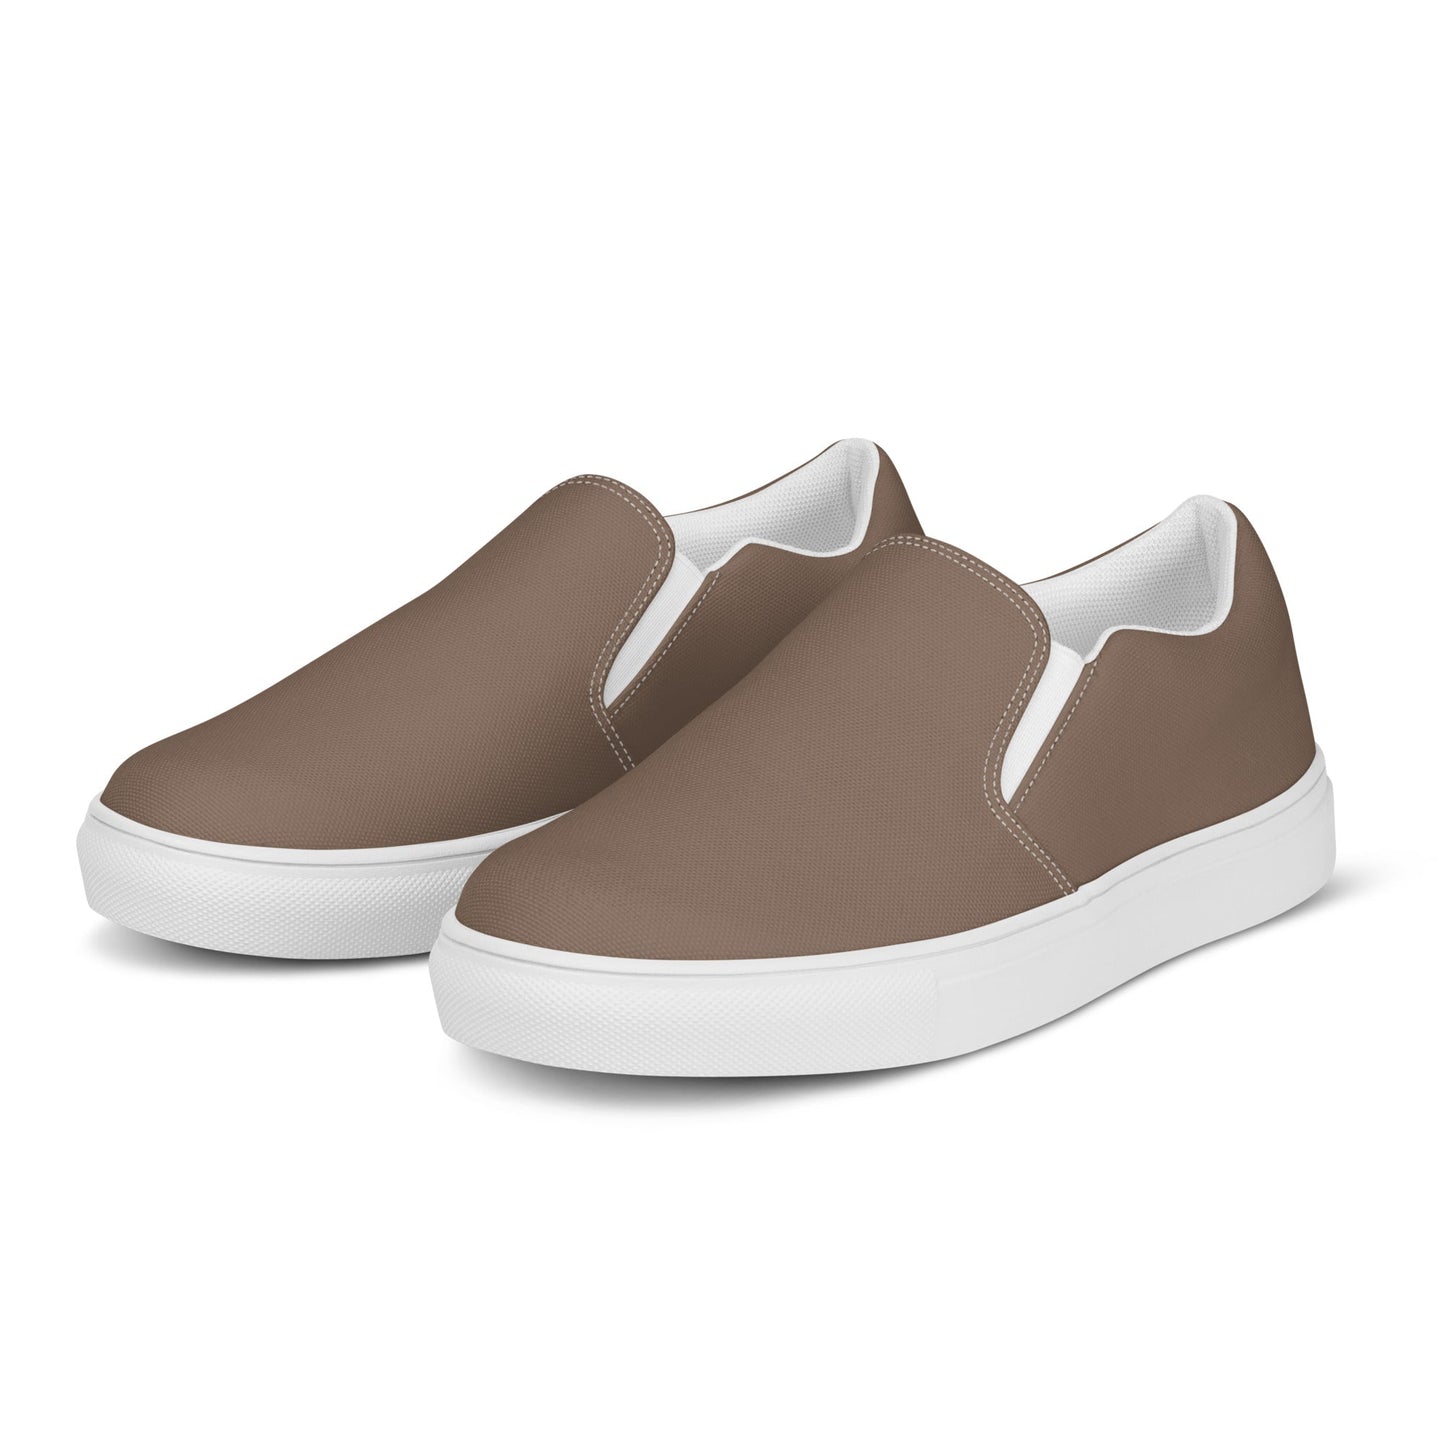 klasneakers Women’s slip-on canvas shoes - Latte Tan